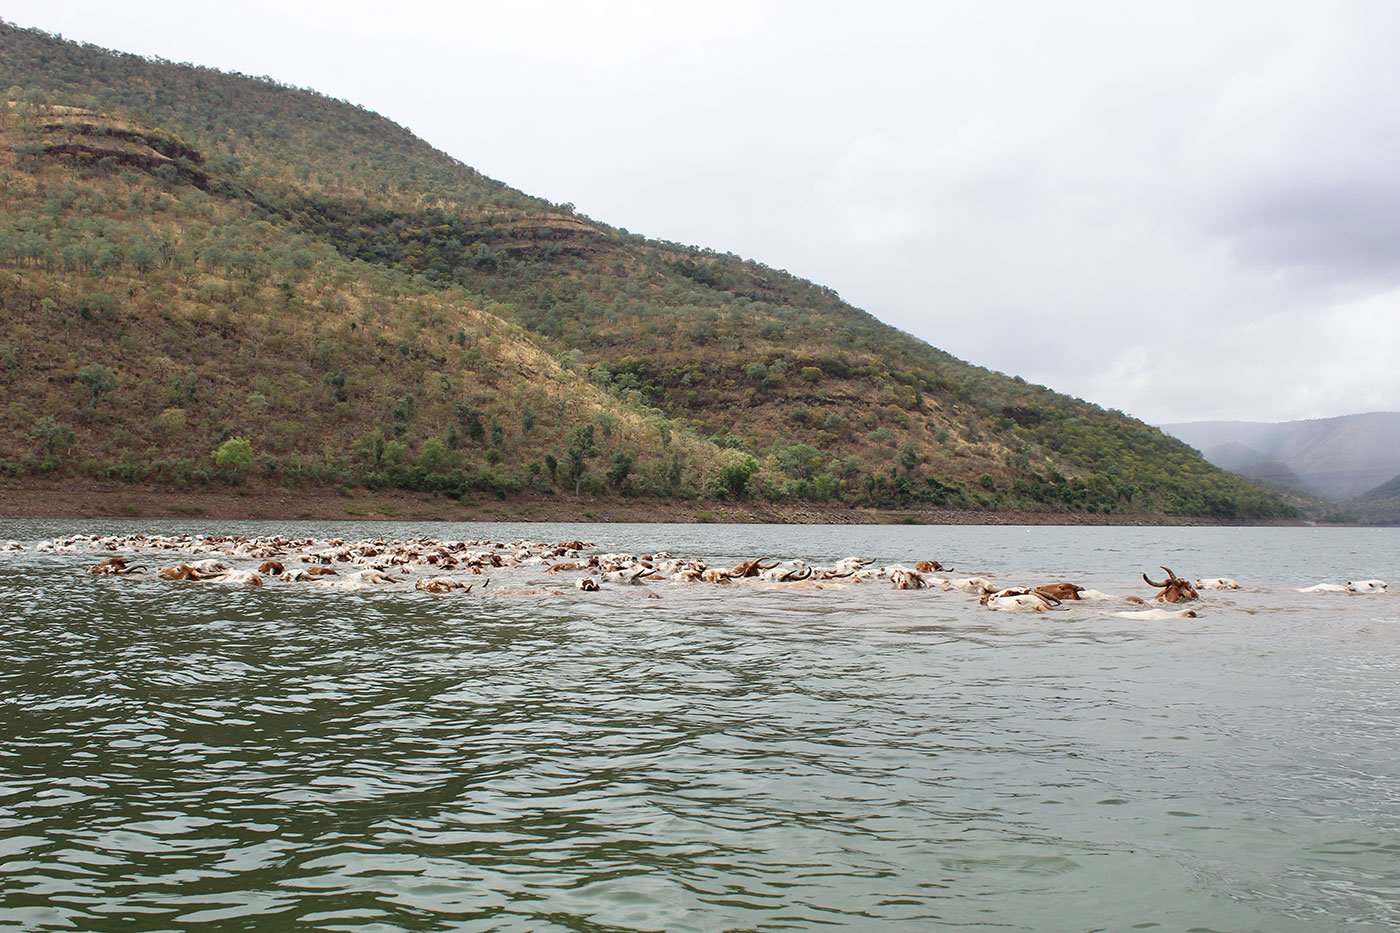 A heard of cattle walking through a river